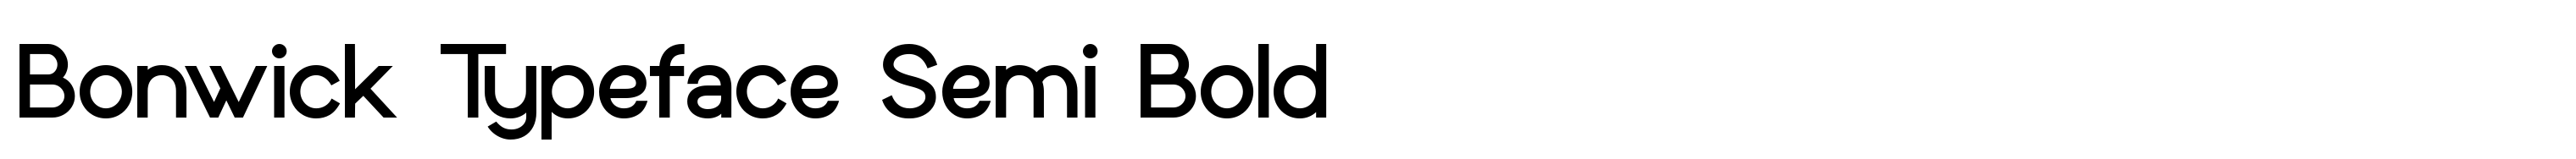 Bonwick Typeface Semi Bold